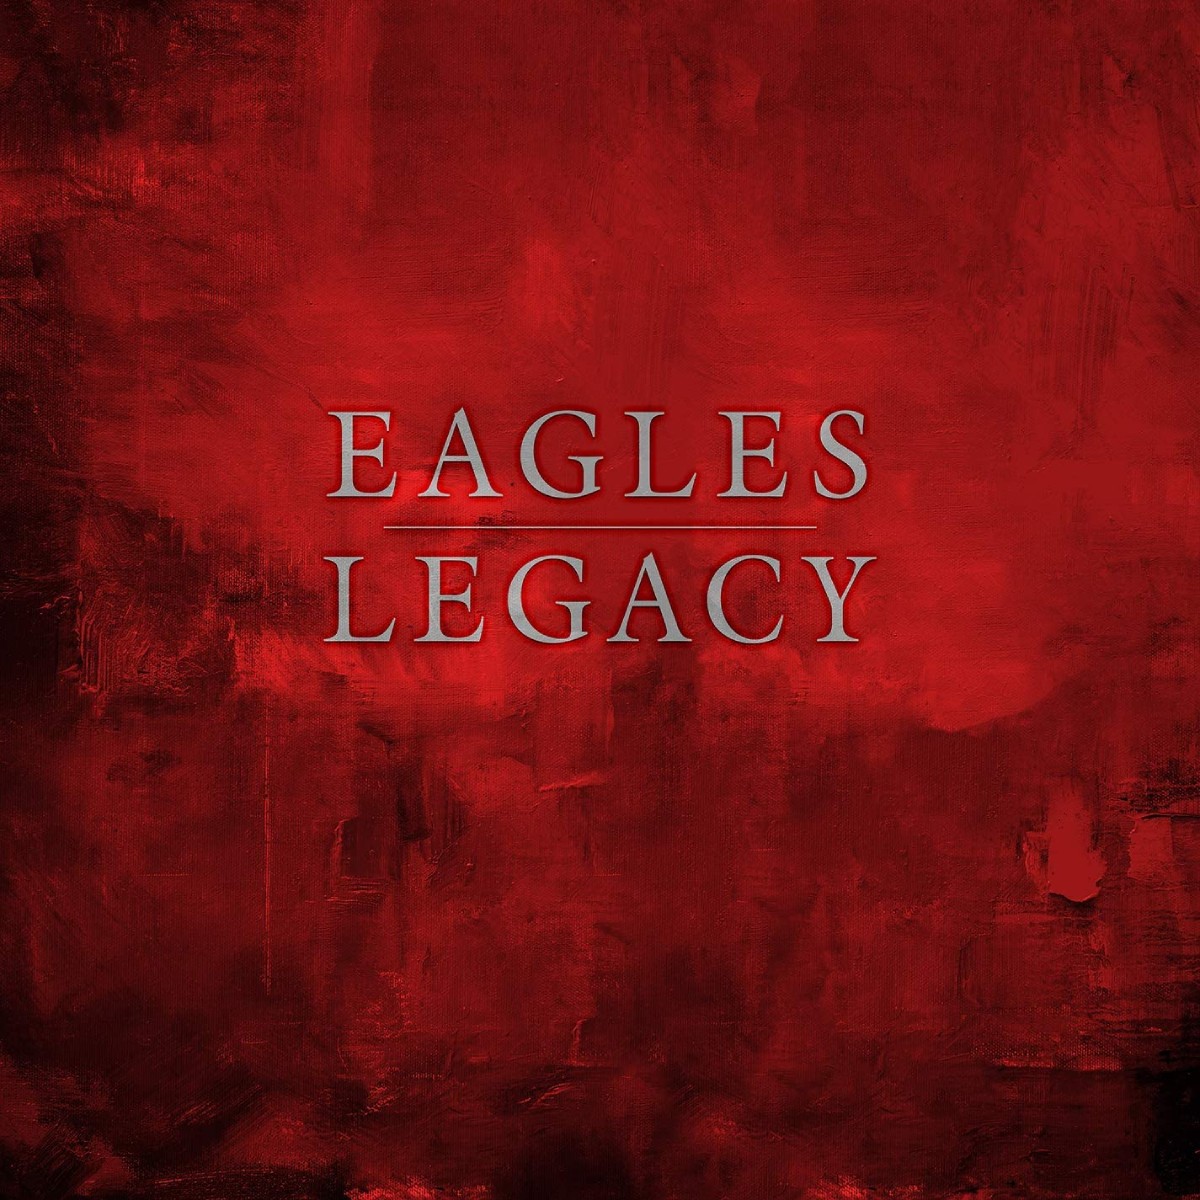 The Eagles, "Legacy" album